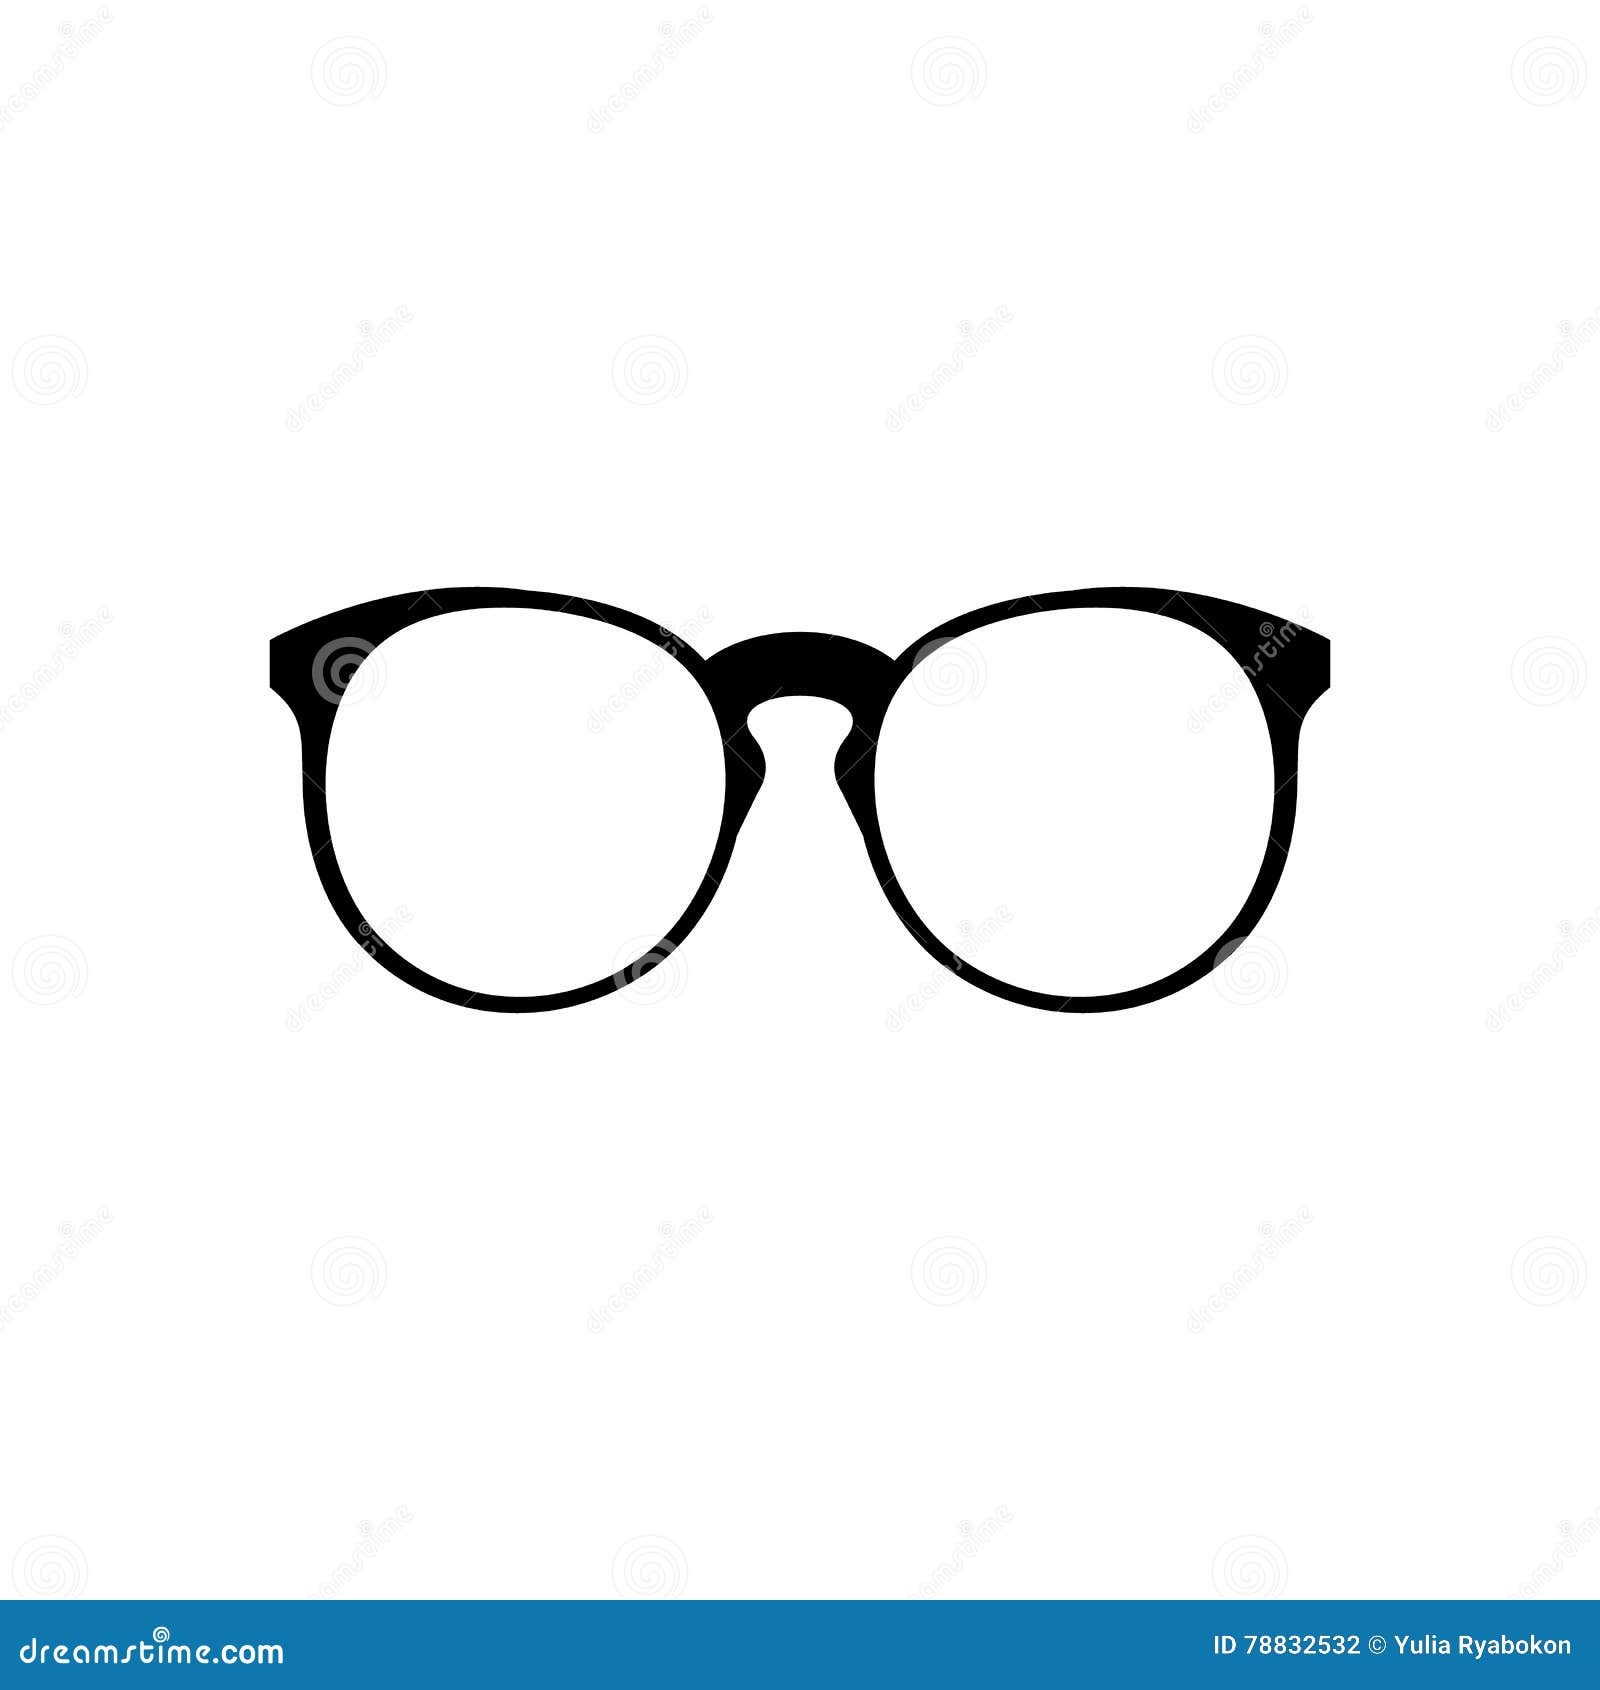 eyeglasses icon simple